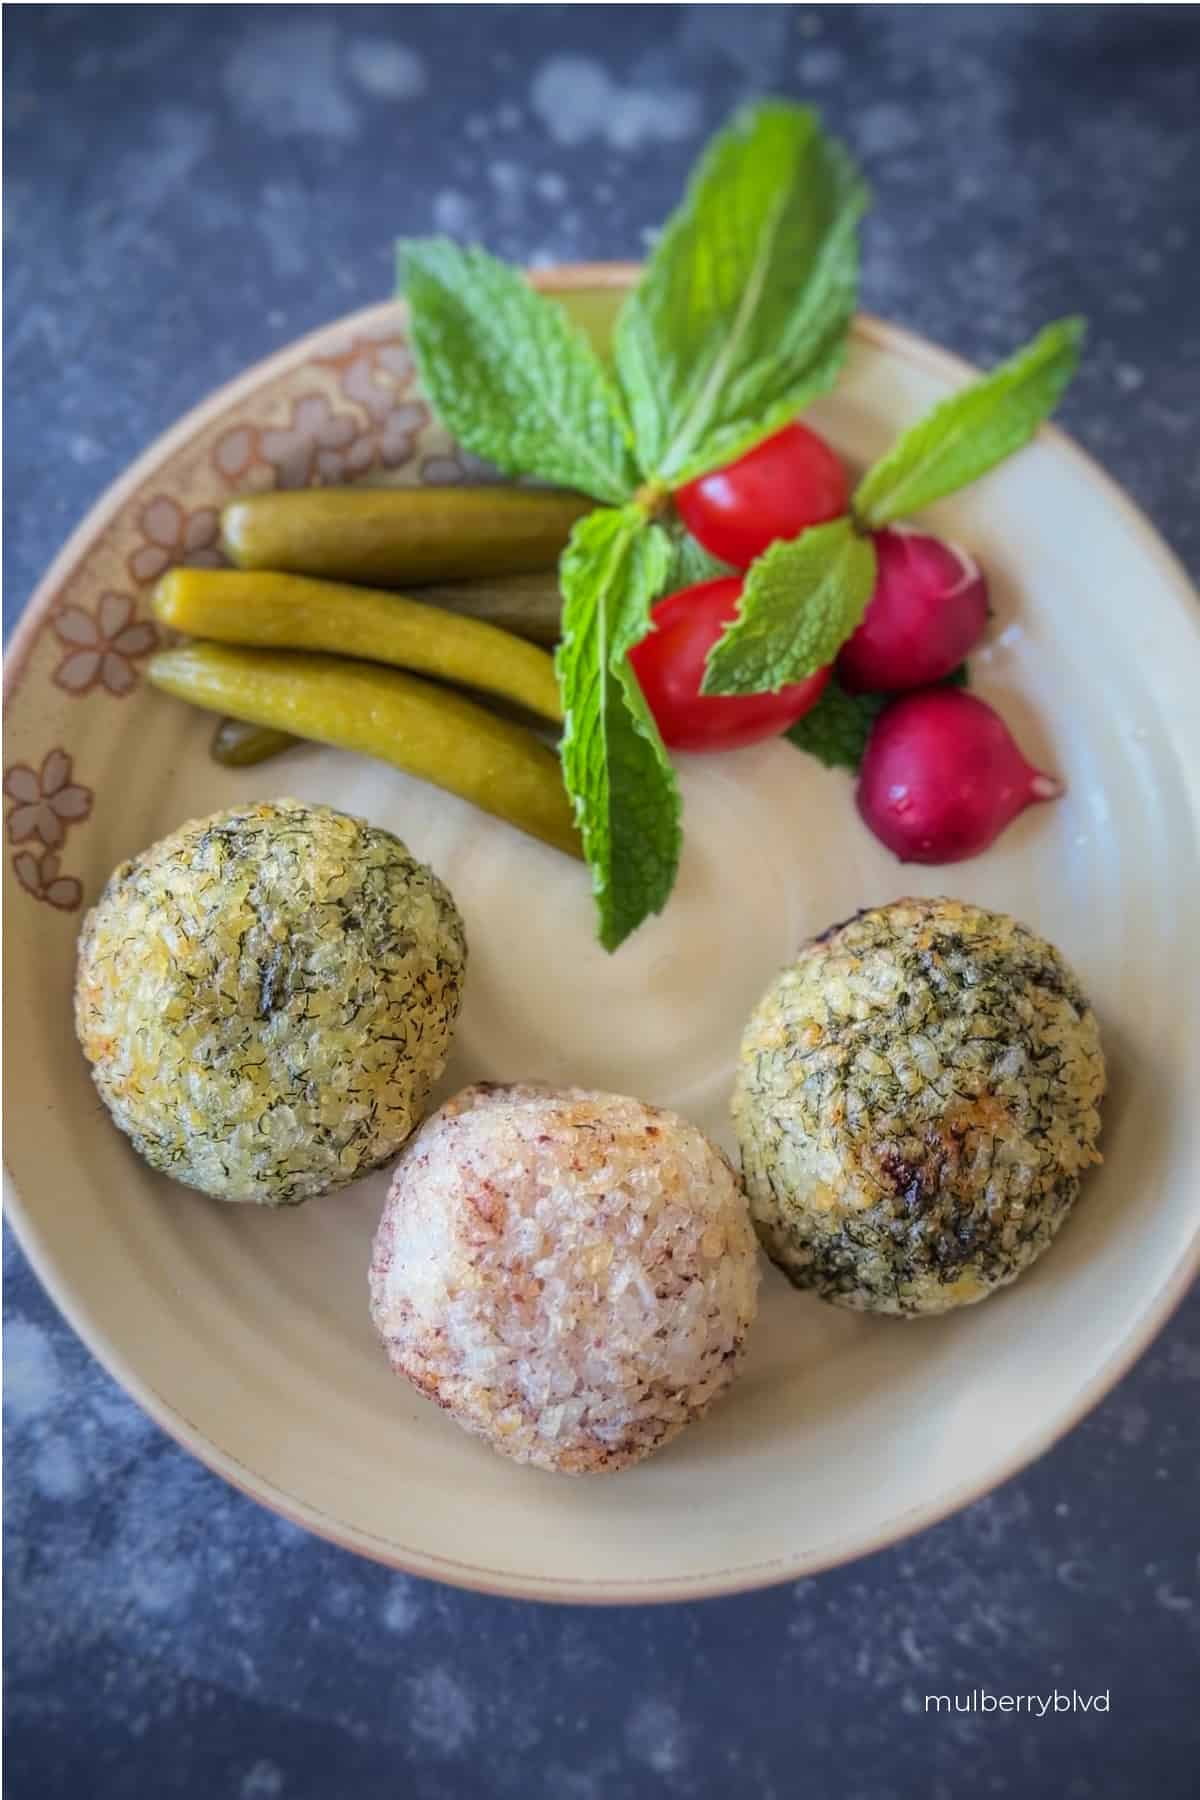 Crispy Tahdig rice balls with garnish on a plate